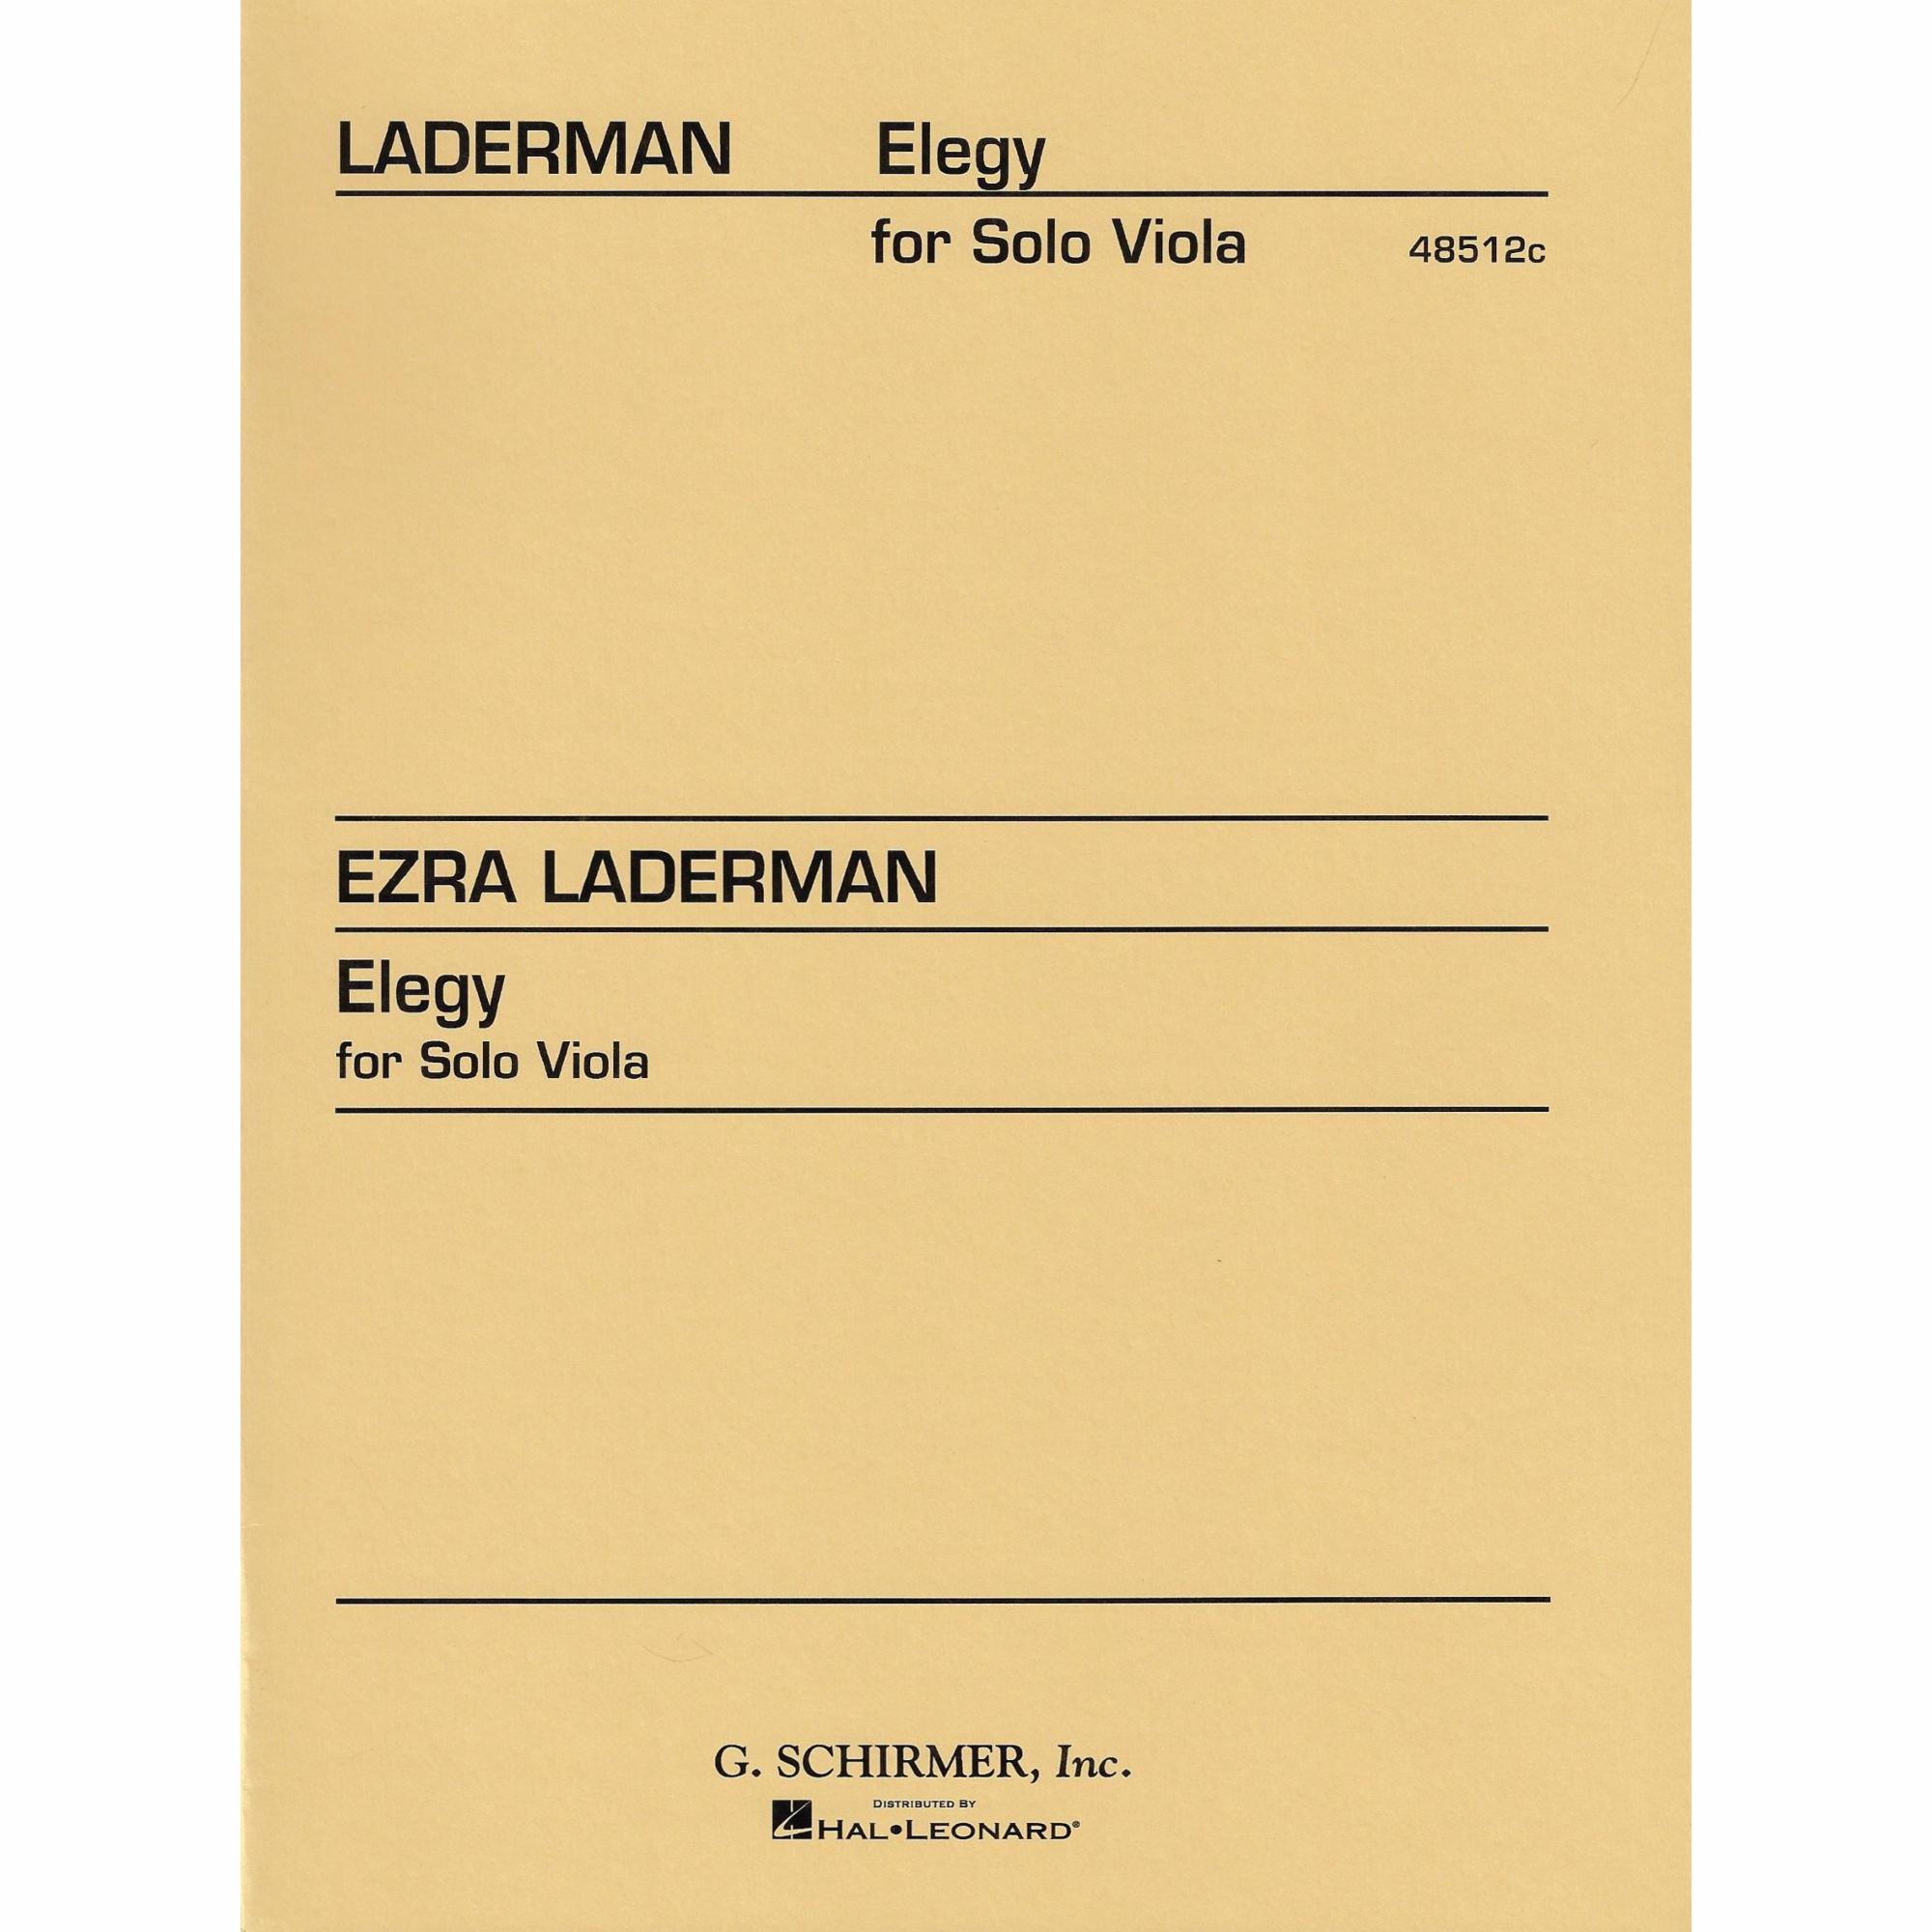 Laderman -- Elegy for Solo Viola